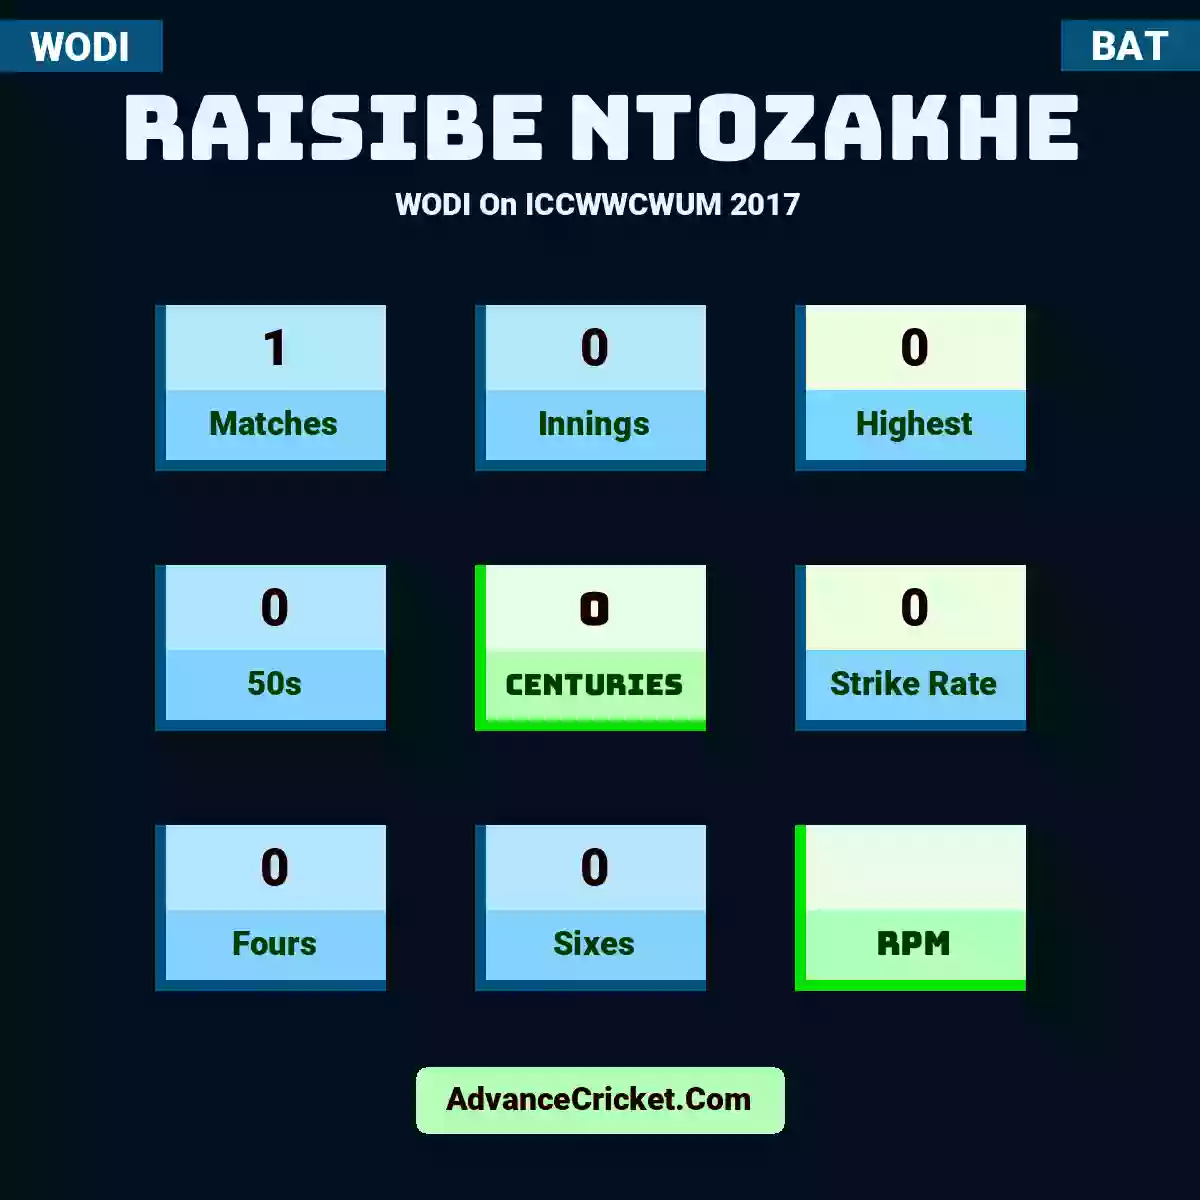 Raisibe Ntozakhe WODI  On ICCWWCWUM 2017, Raisibe Ntozakhe played 1 matches, scored 0 runs as highest, 0 half-centuries, and 0 centuries, with a strike rate of 0. R.Ntozakhe hit 0 fours and 0 sixes.